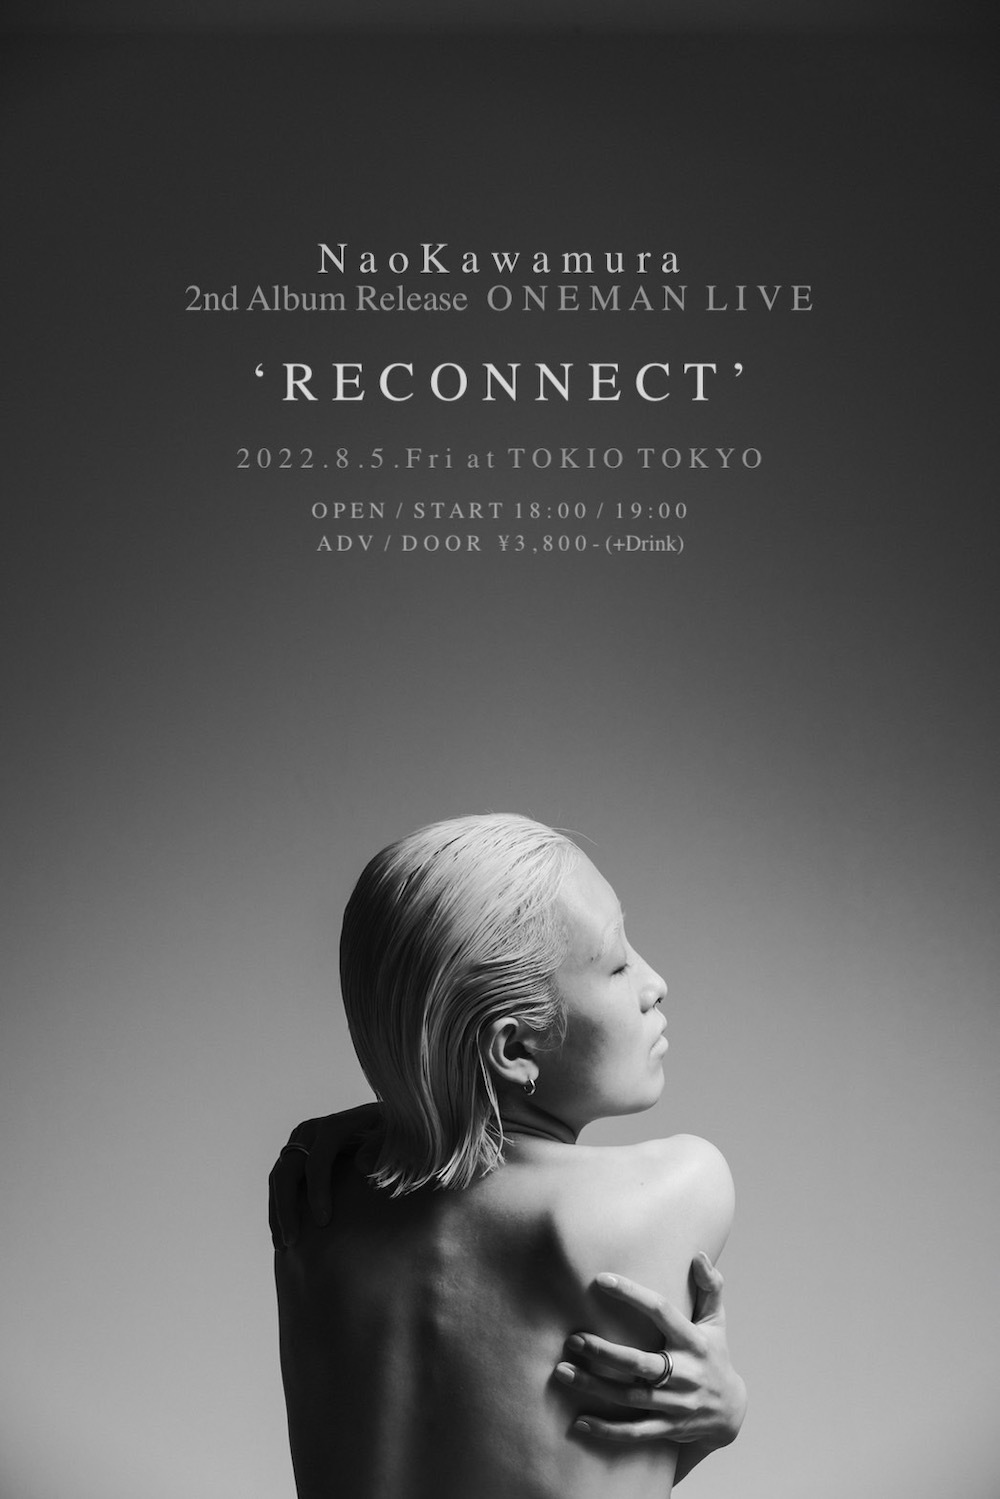 2nd Album Release ONEMAN LIVE ‘RECONNECT’